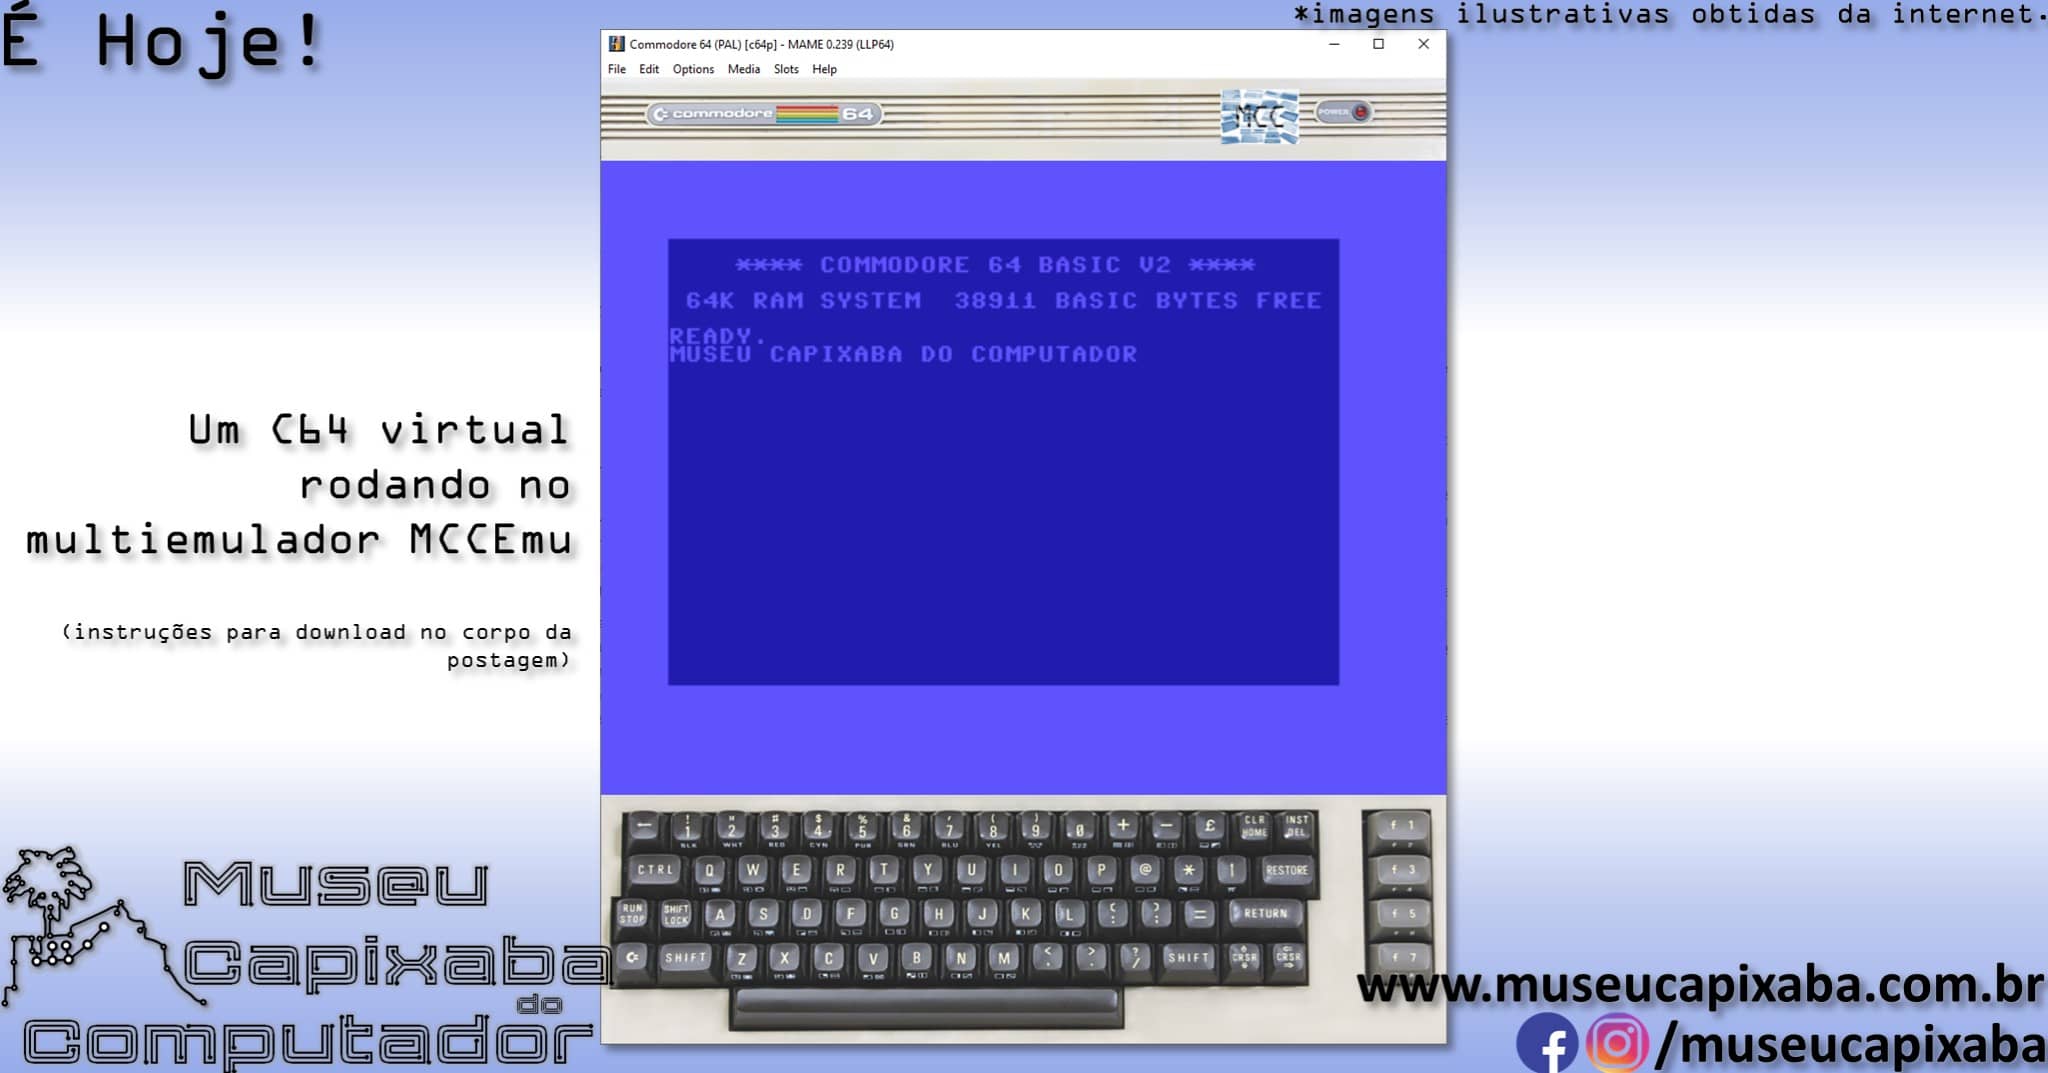 microcomputador Commodore 64 7